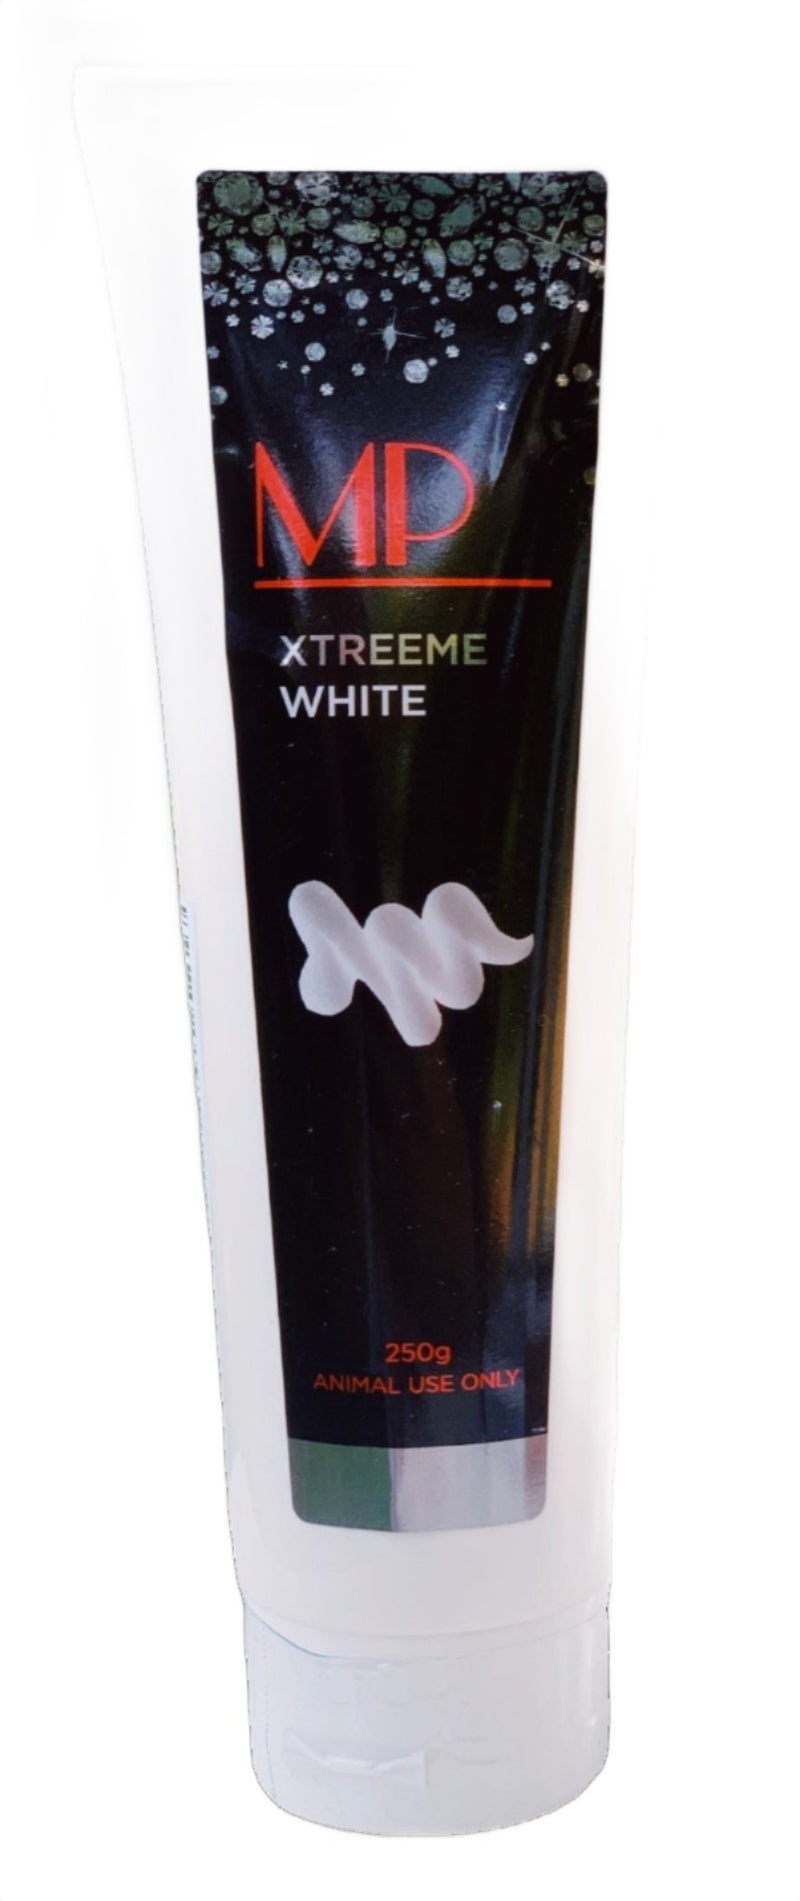 MP Xtreeme White Cover Cream